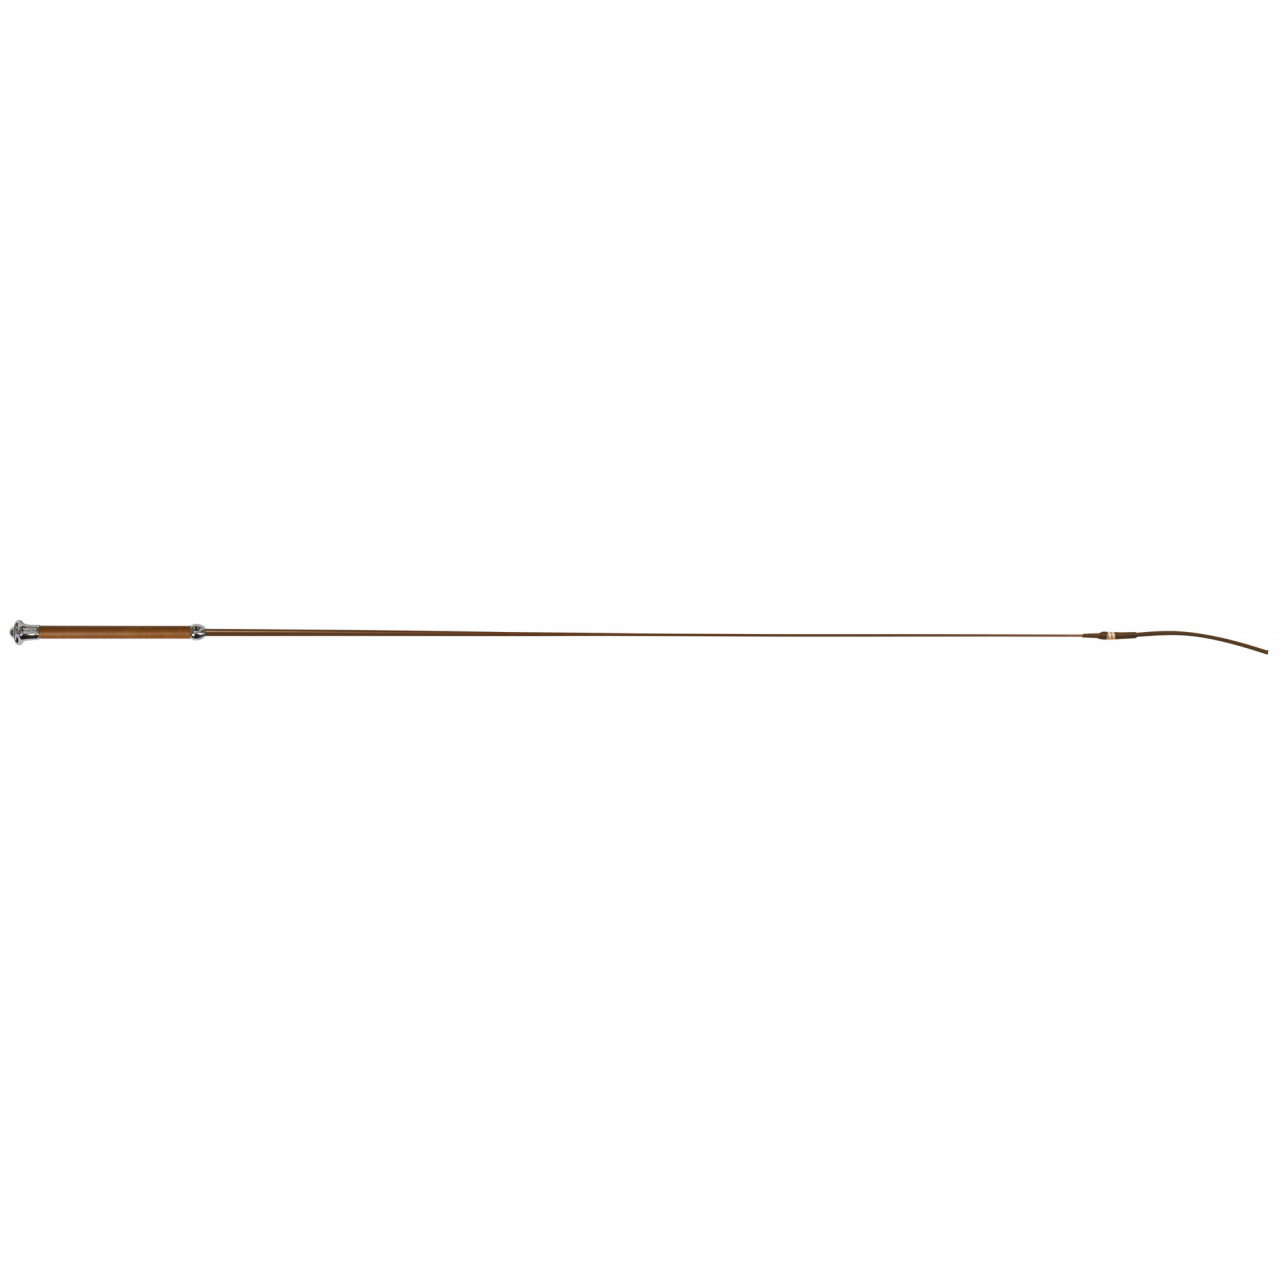 Covalliero díjlovas pálca műbőr borítással - barna, 110 cm